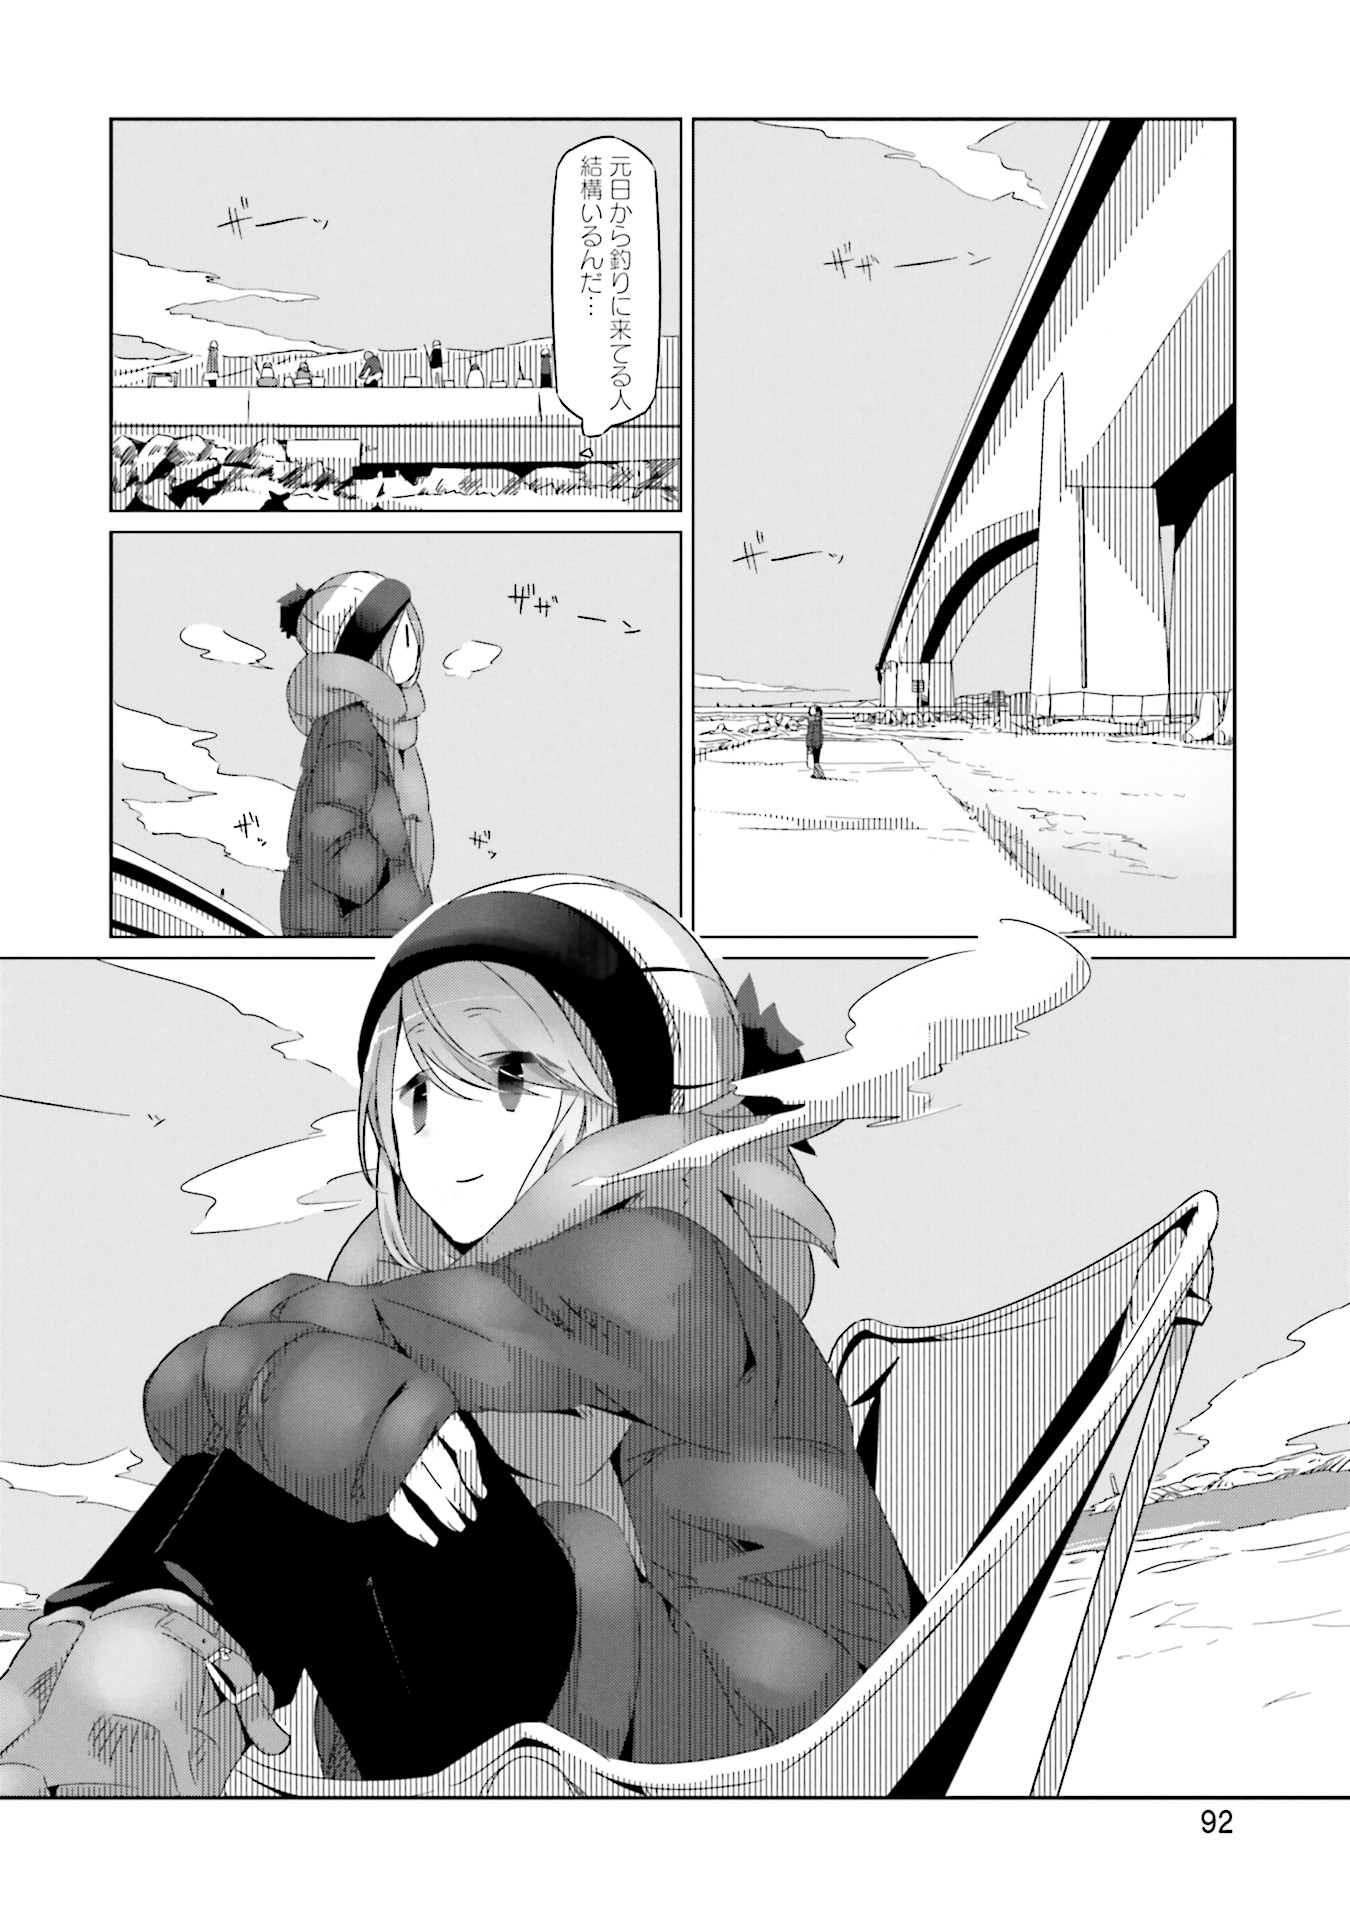 Yuru Camp - Chapter 27 - Page 4